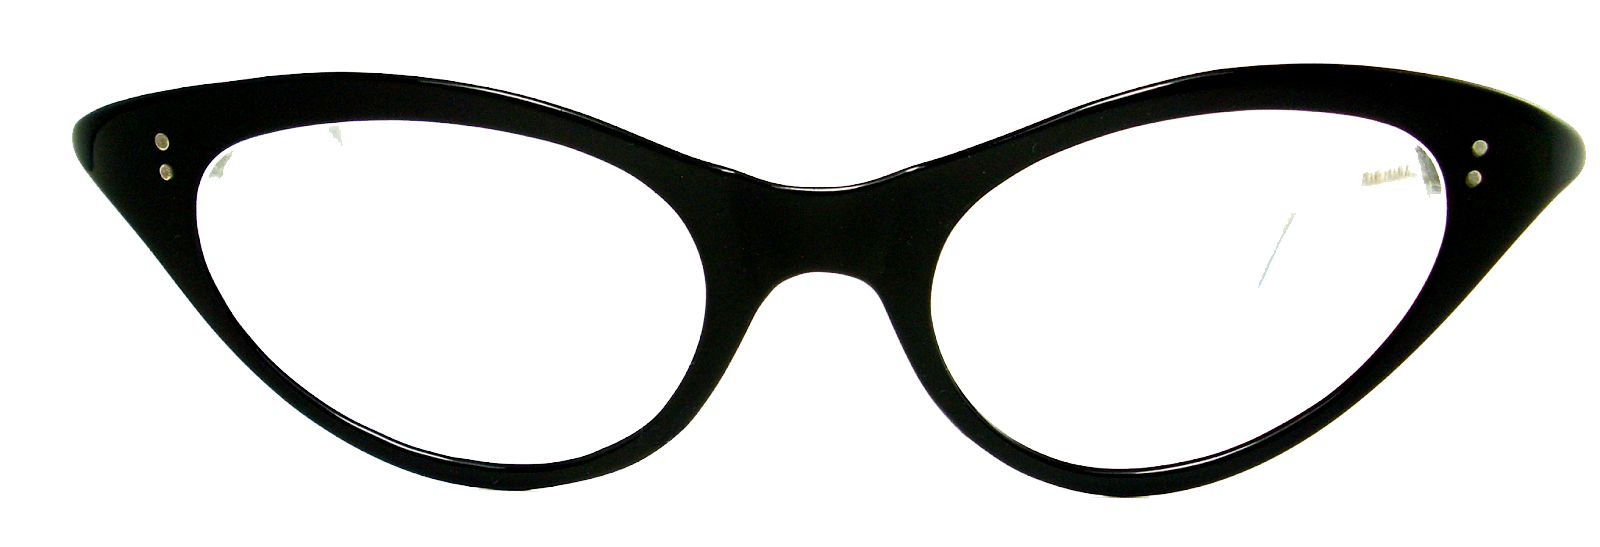 Free Sunglasses Frames PNG Transparent Images, Download Free Sunglasses